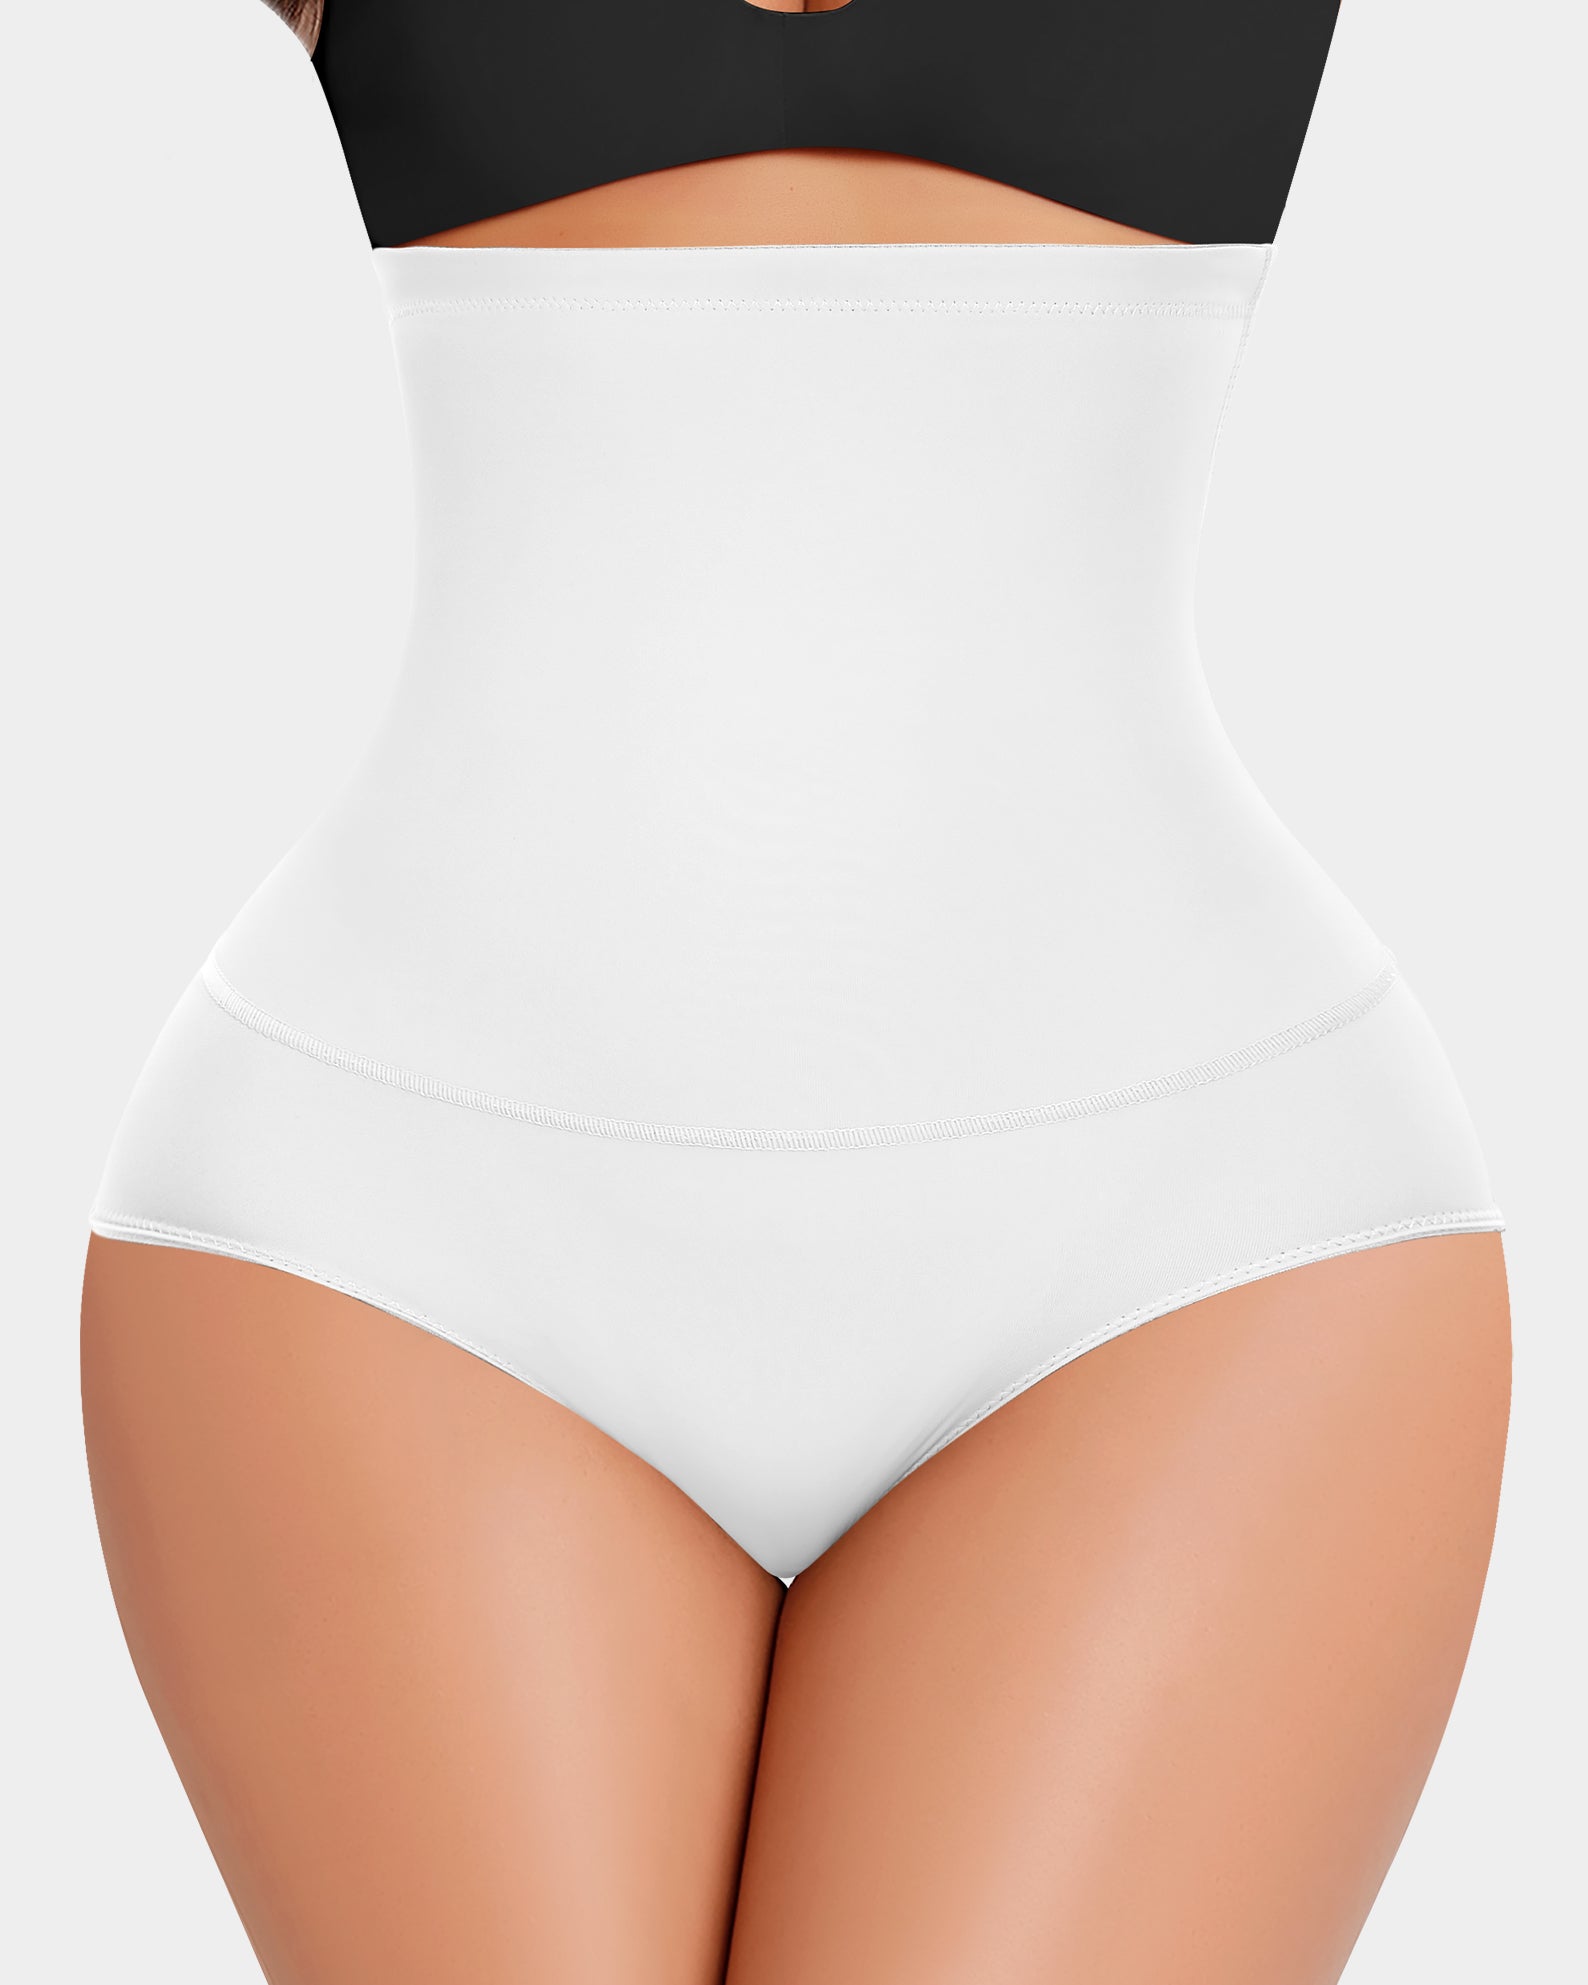 Miyanuby Werena Tummy Control Shapewear Thong for Women Seamless High Waist  Body Shaper Panties Girdle Shaping Underwear Black S-4XL